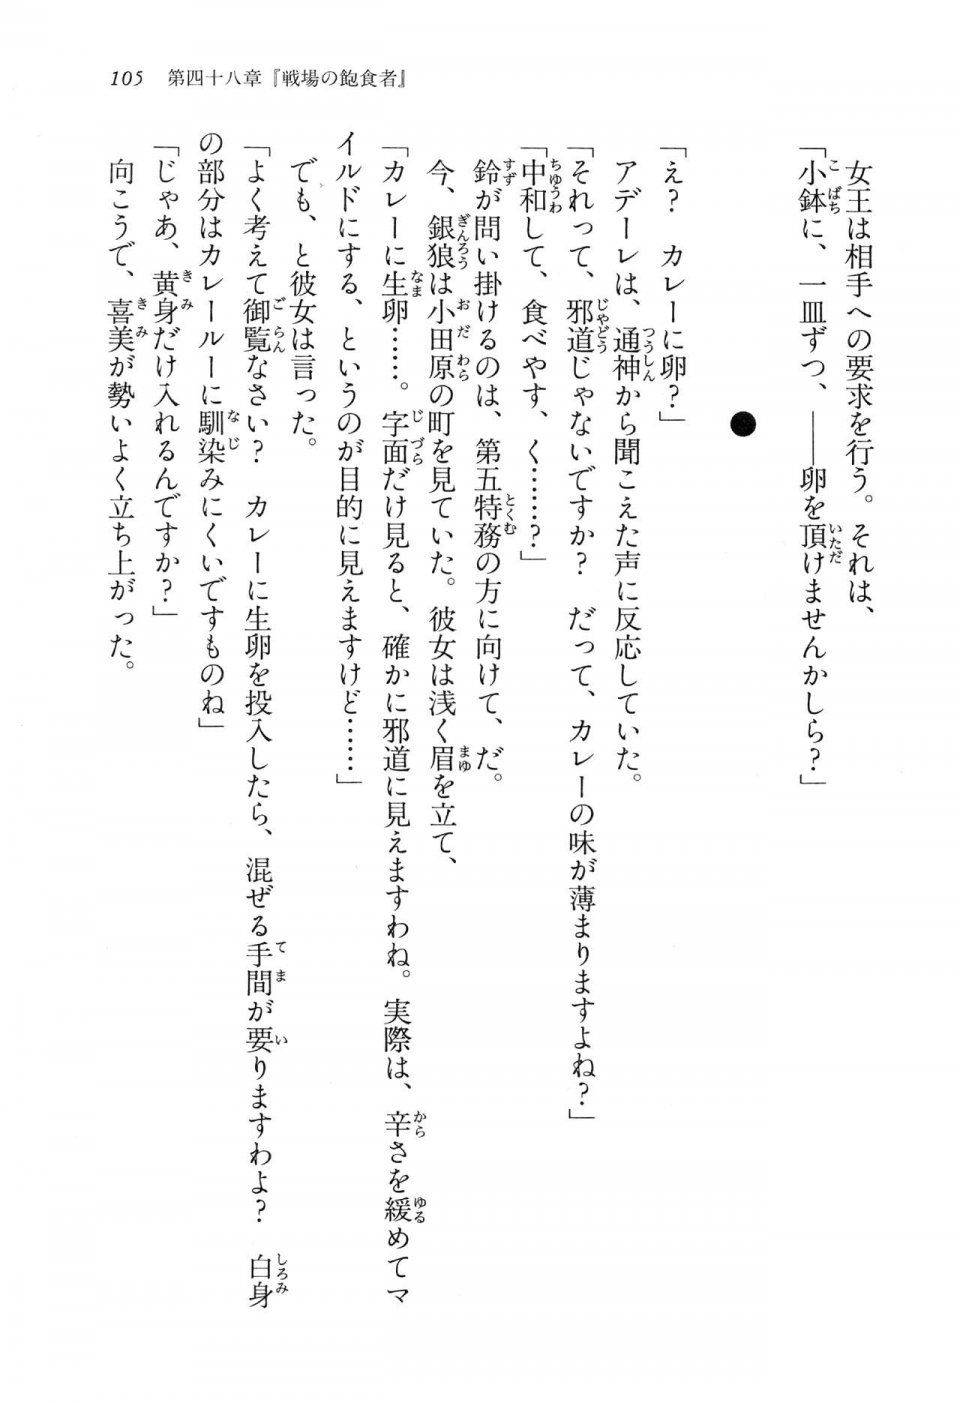 Kyoukai Senjou no Horizon LN Vol 15(6C) Part 1 - Photo #105